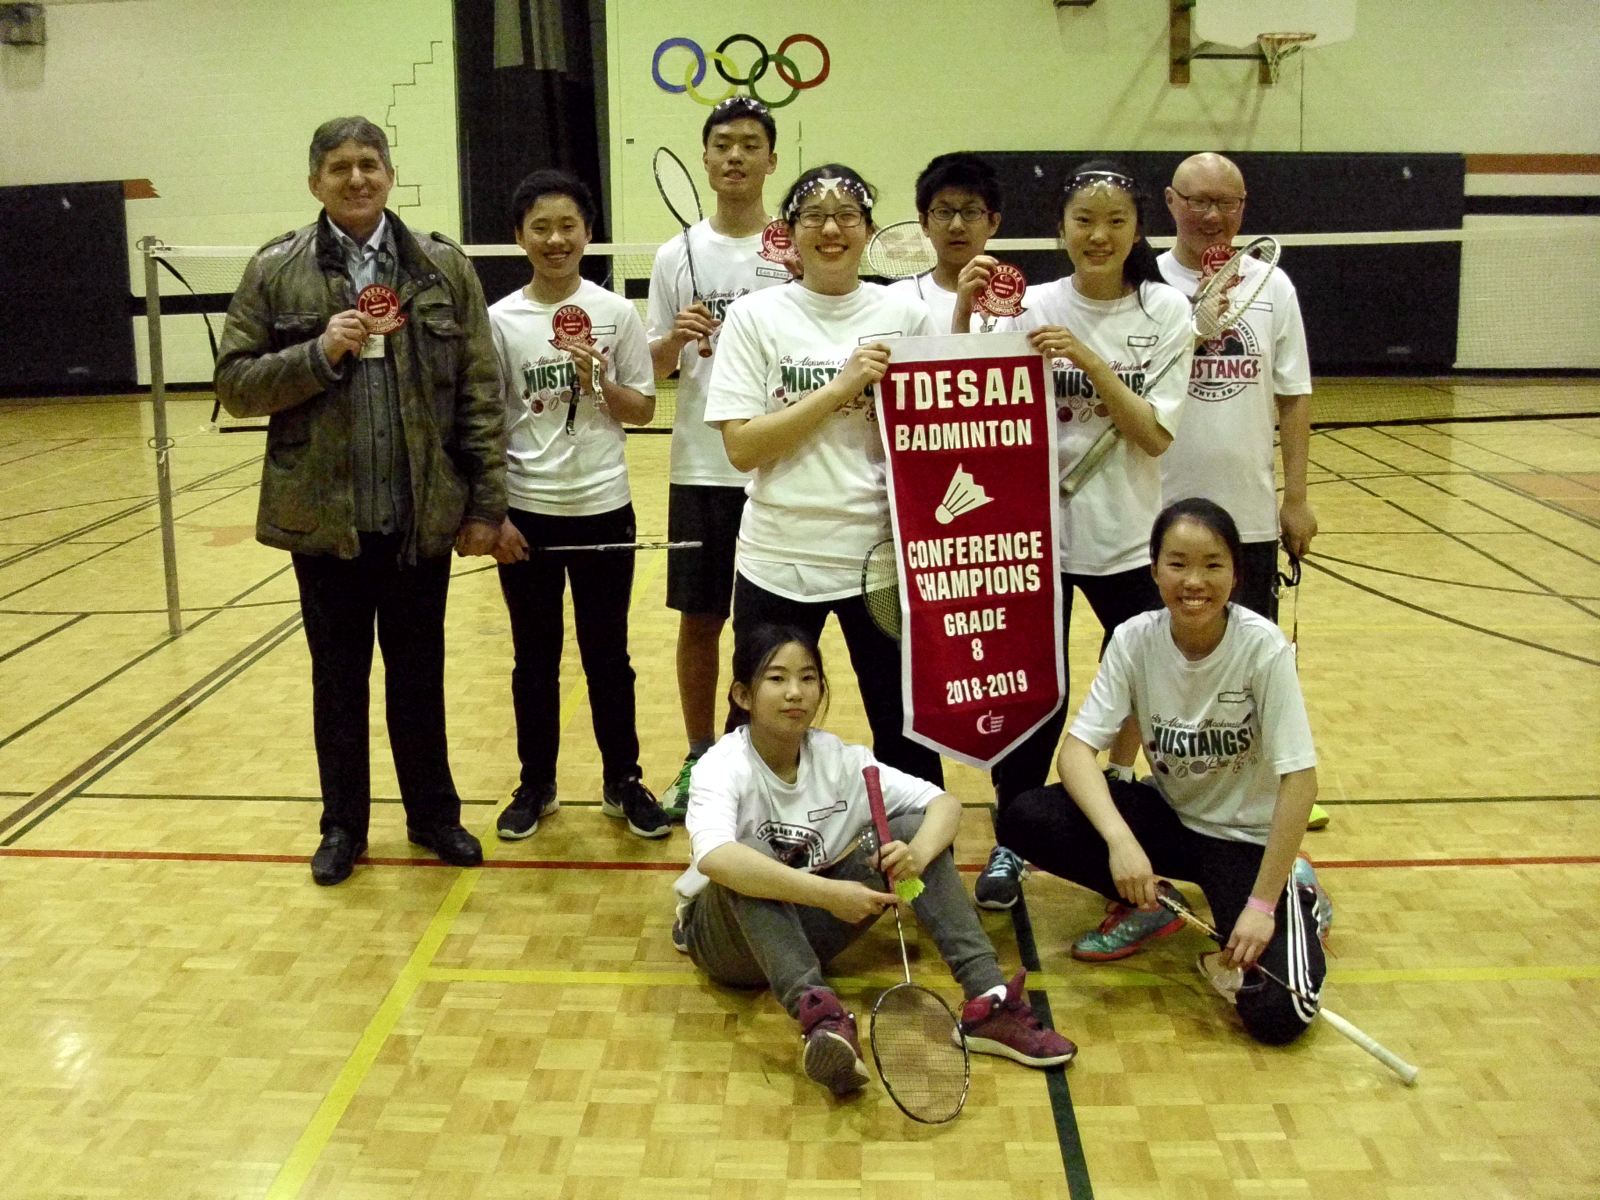 Grade 8 Badminton Team Conference Champions